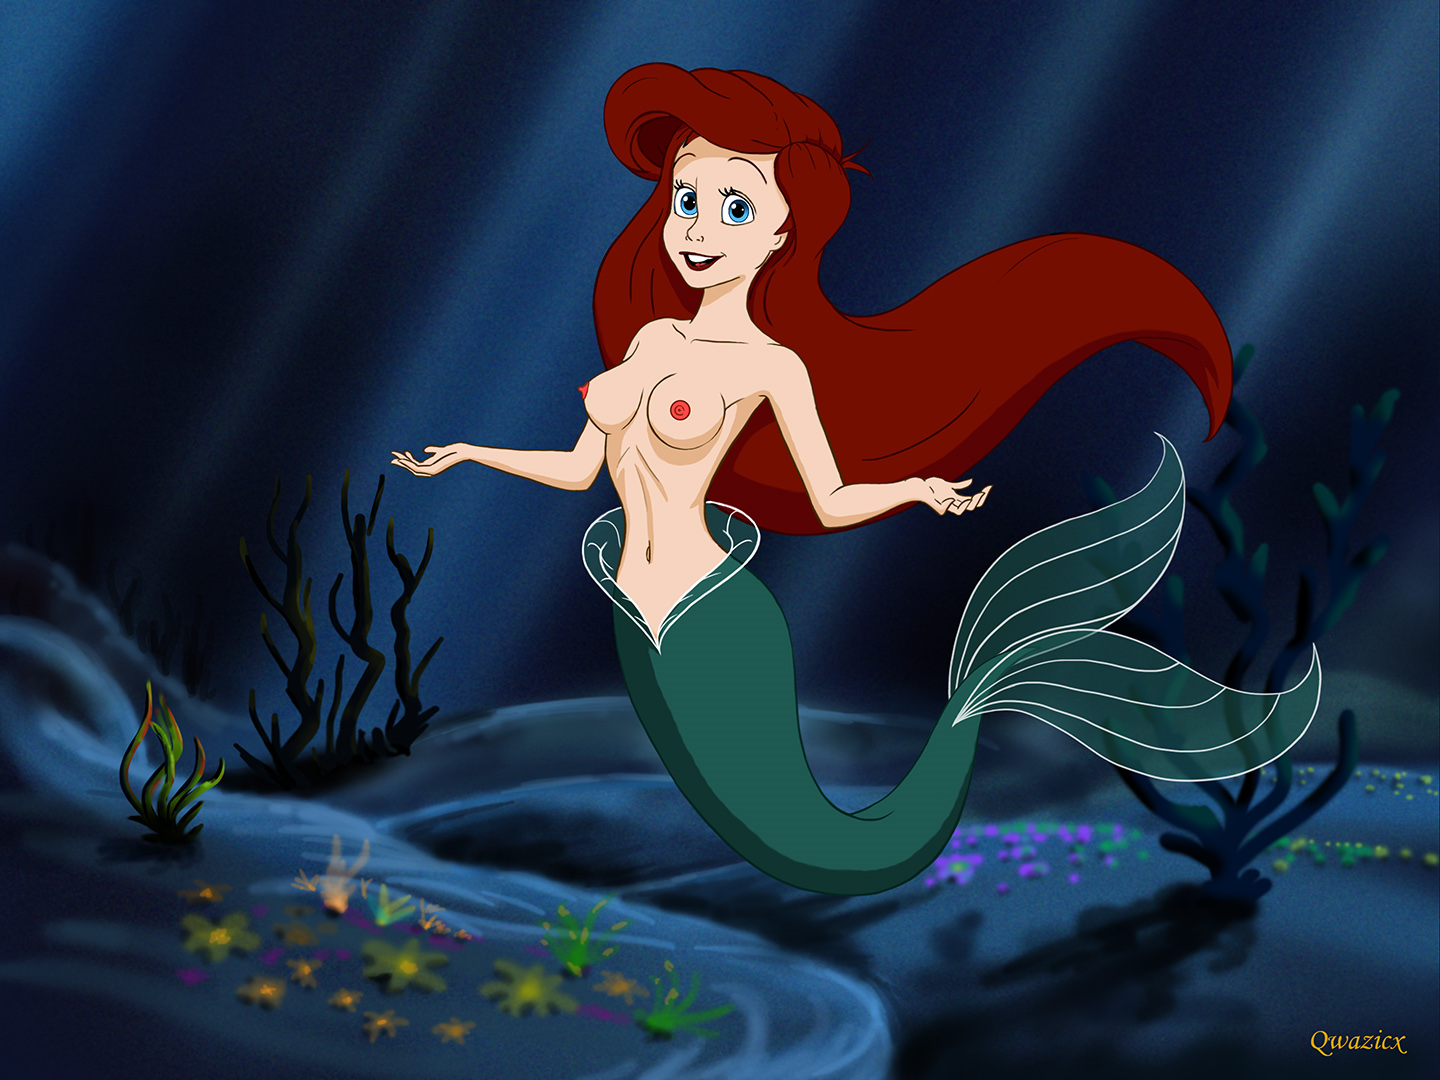 2373505 - Ariel The_Little_Mermaid qwazicx.png. 